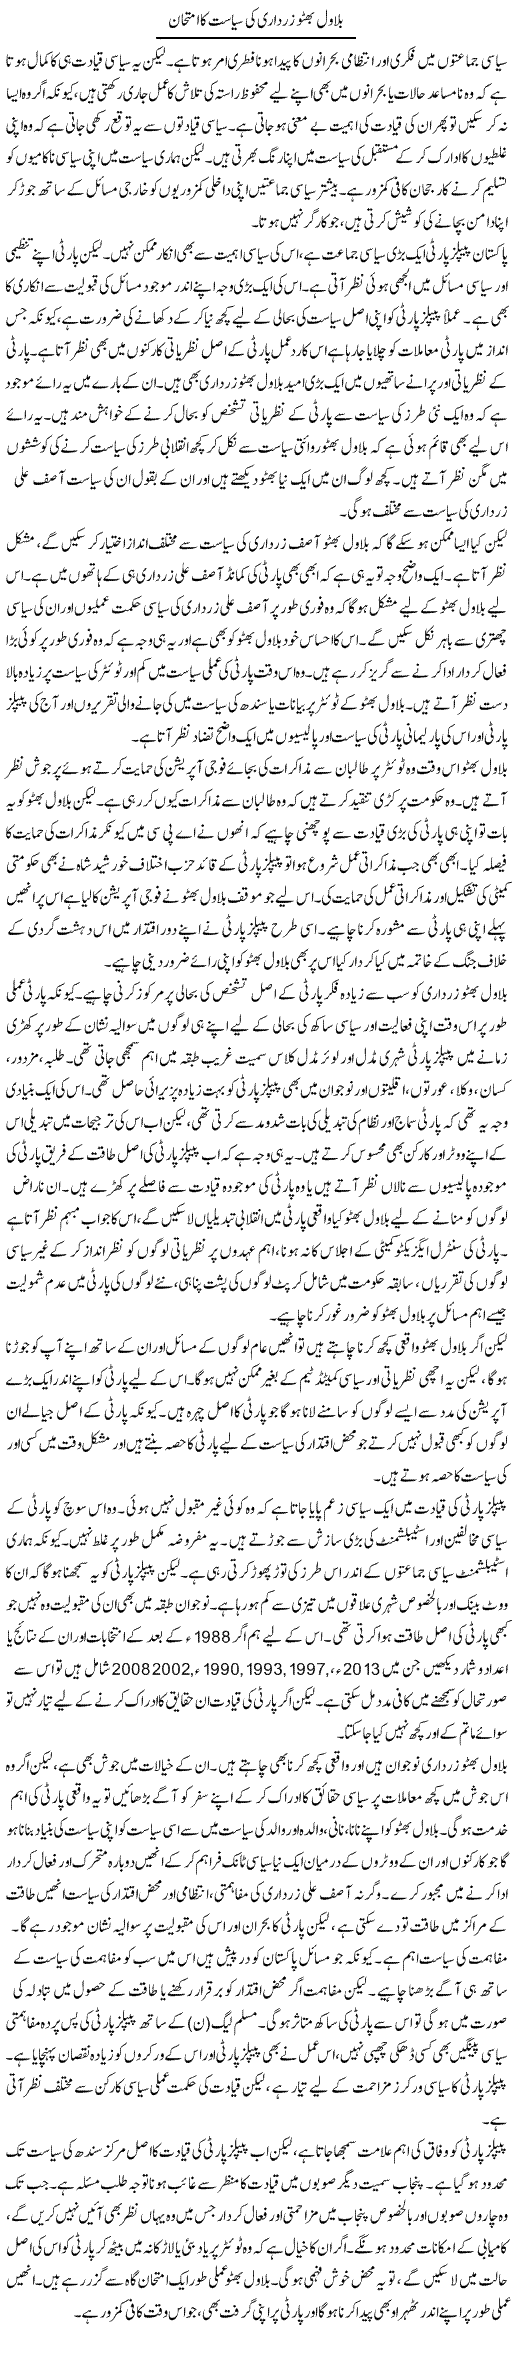 Bilawal Bhutto Zardari Ki Siasat Ka Imtehan | Salman Abid | Daily Urdu Columns